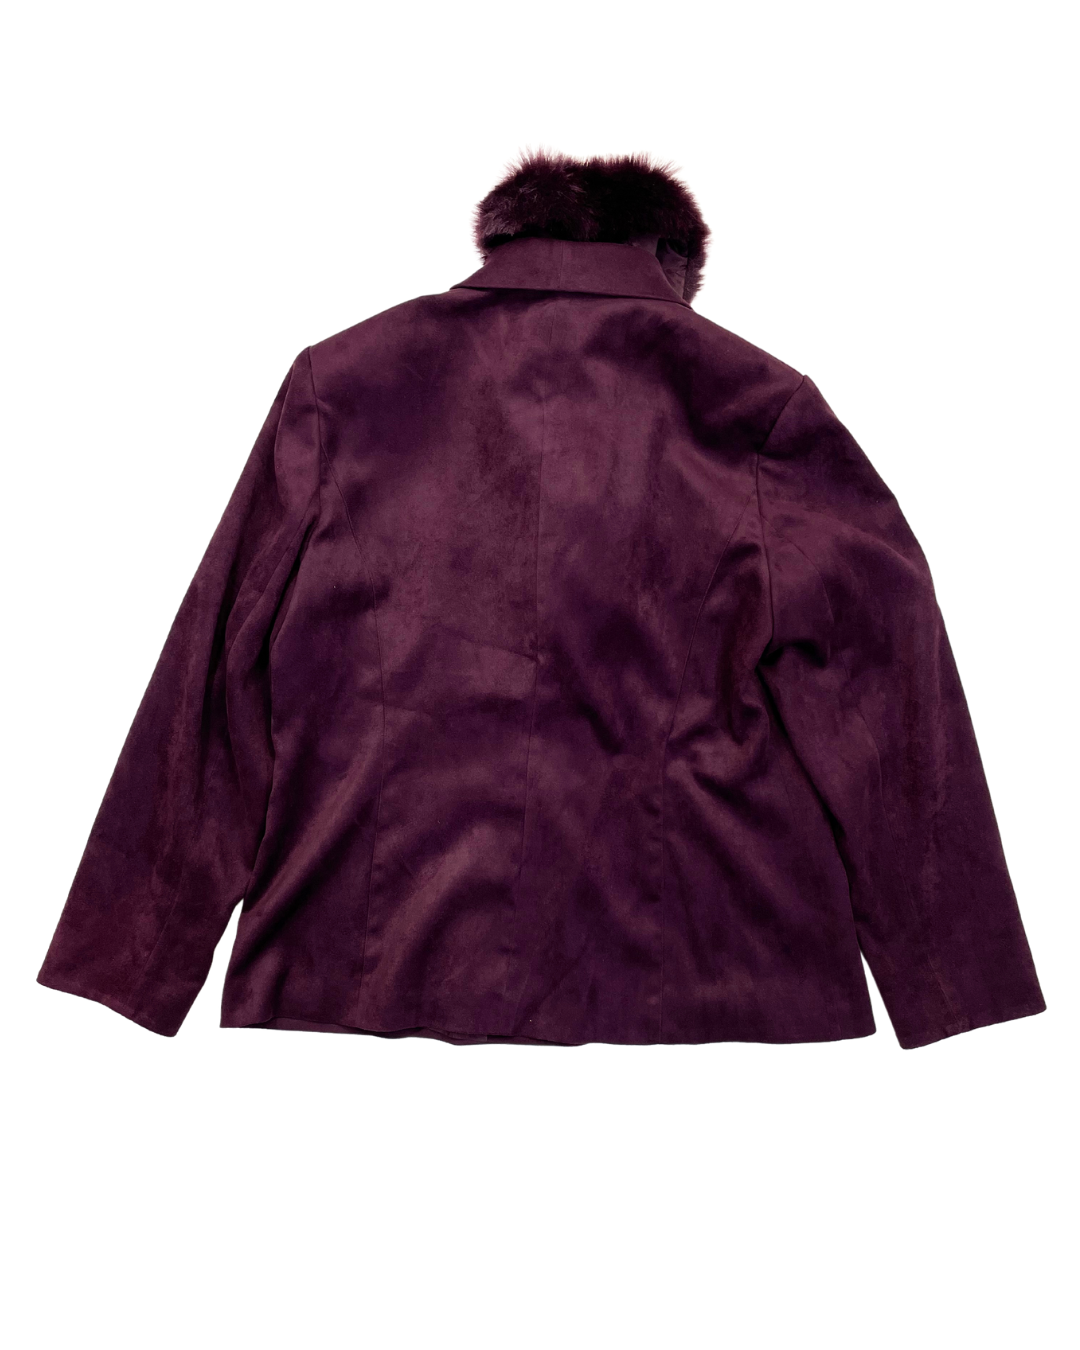 Jacques Vert Burgundy Faux Fur Collar Jacket